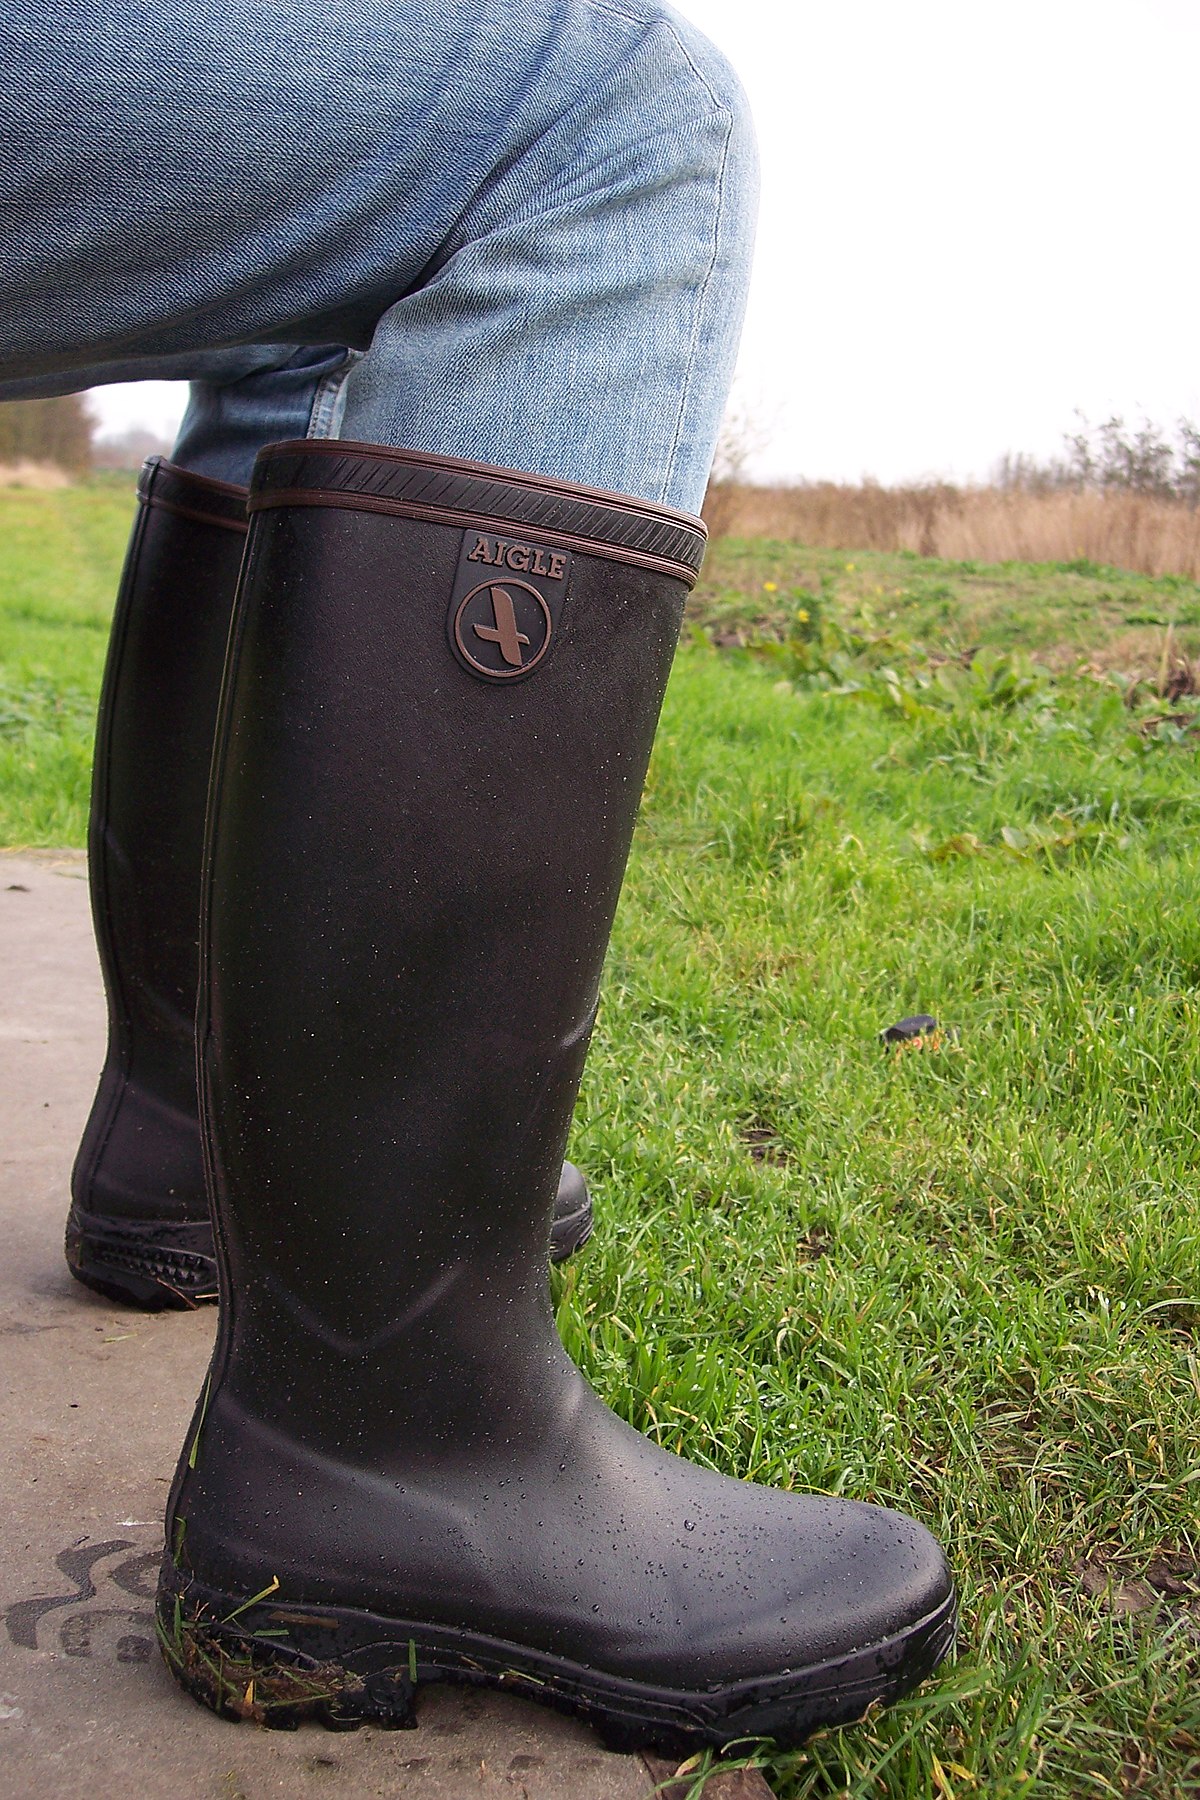 boots.jpg - Wikimedia Commons